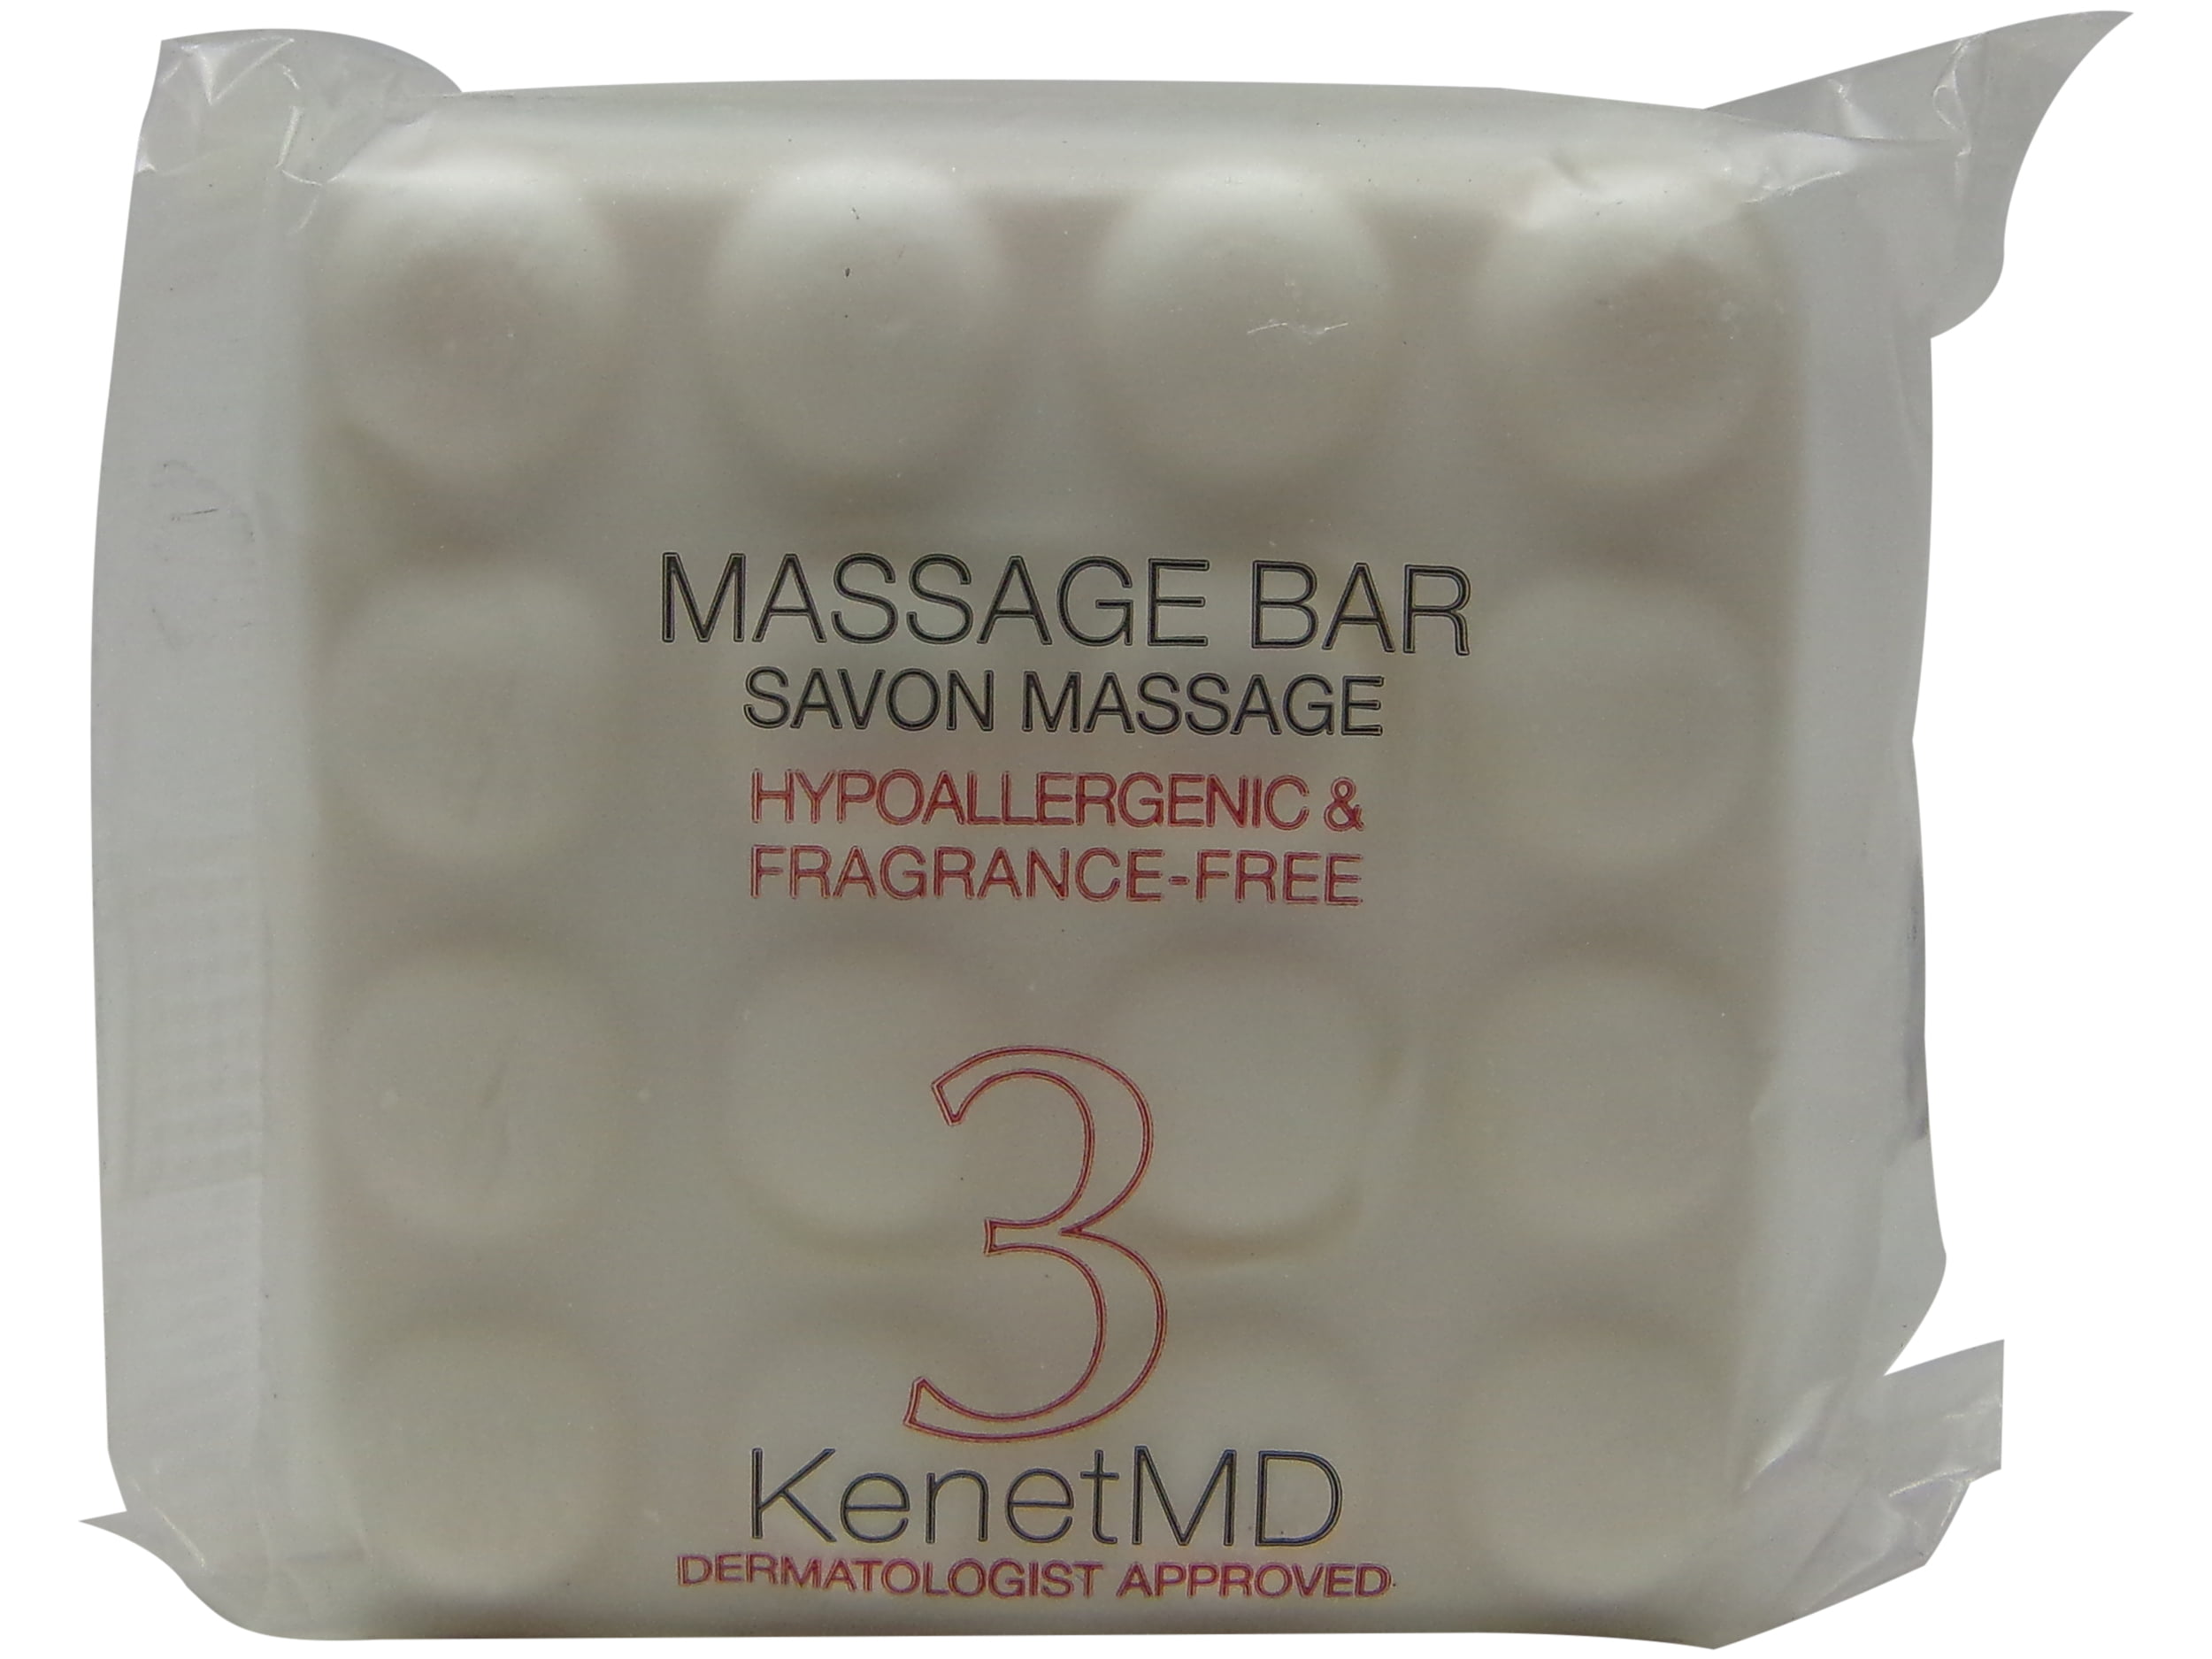 Lot Of 20 KenetMD Massage Bar Soap Travel Size 1.75oz 